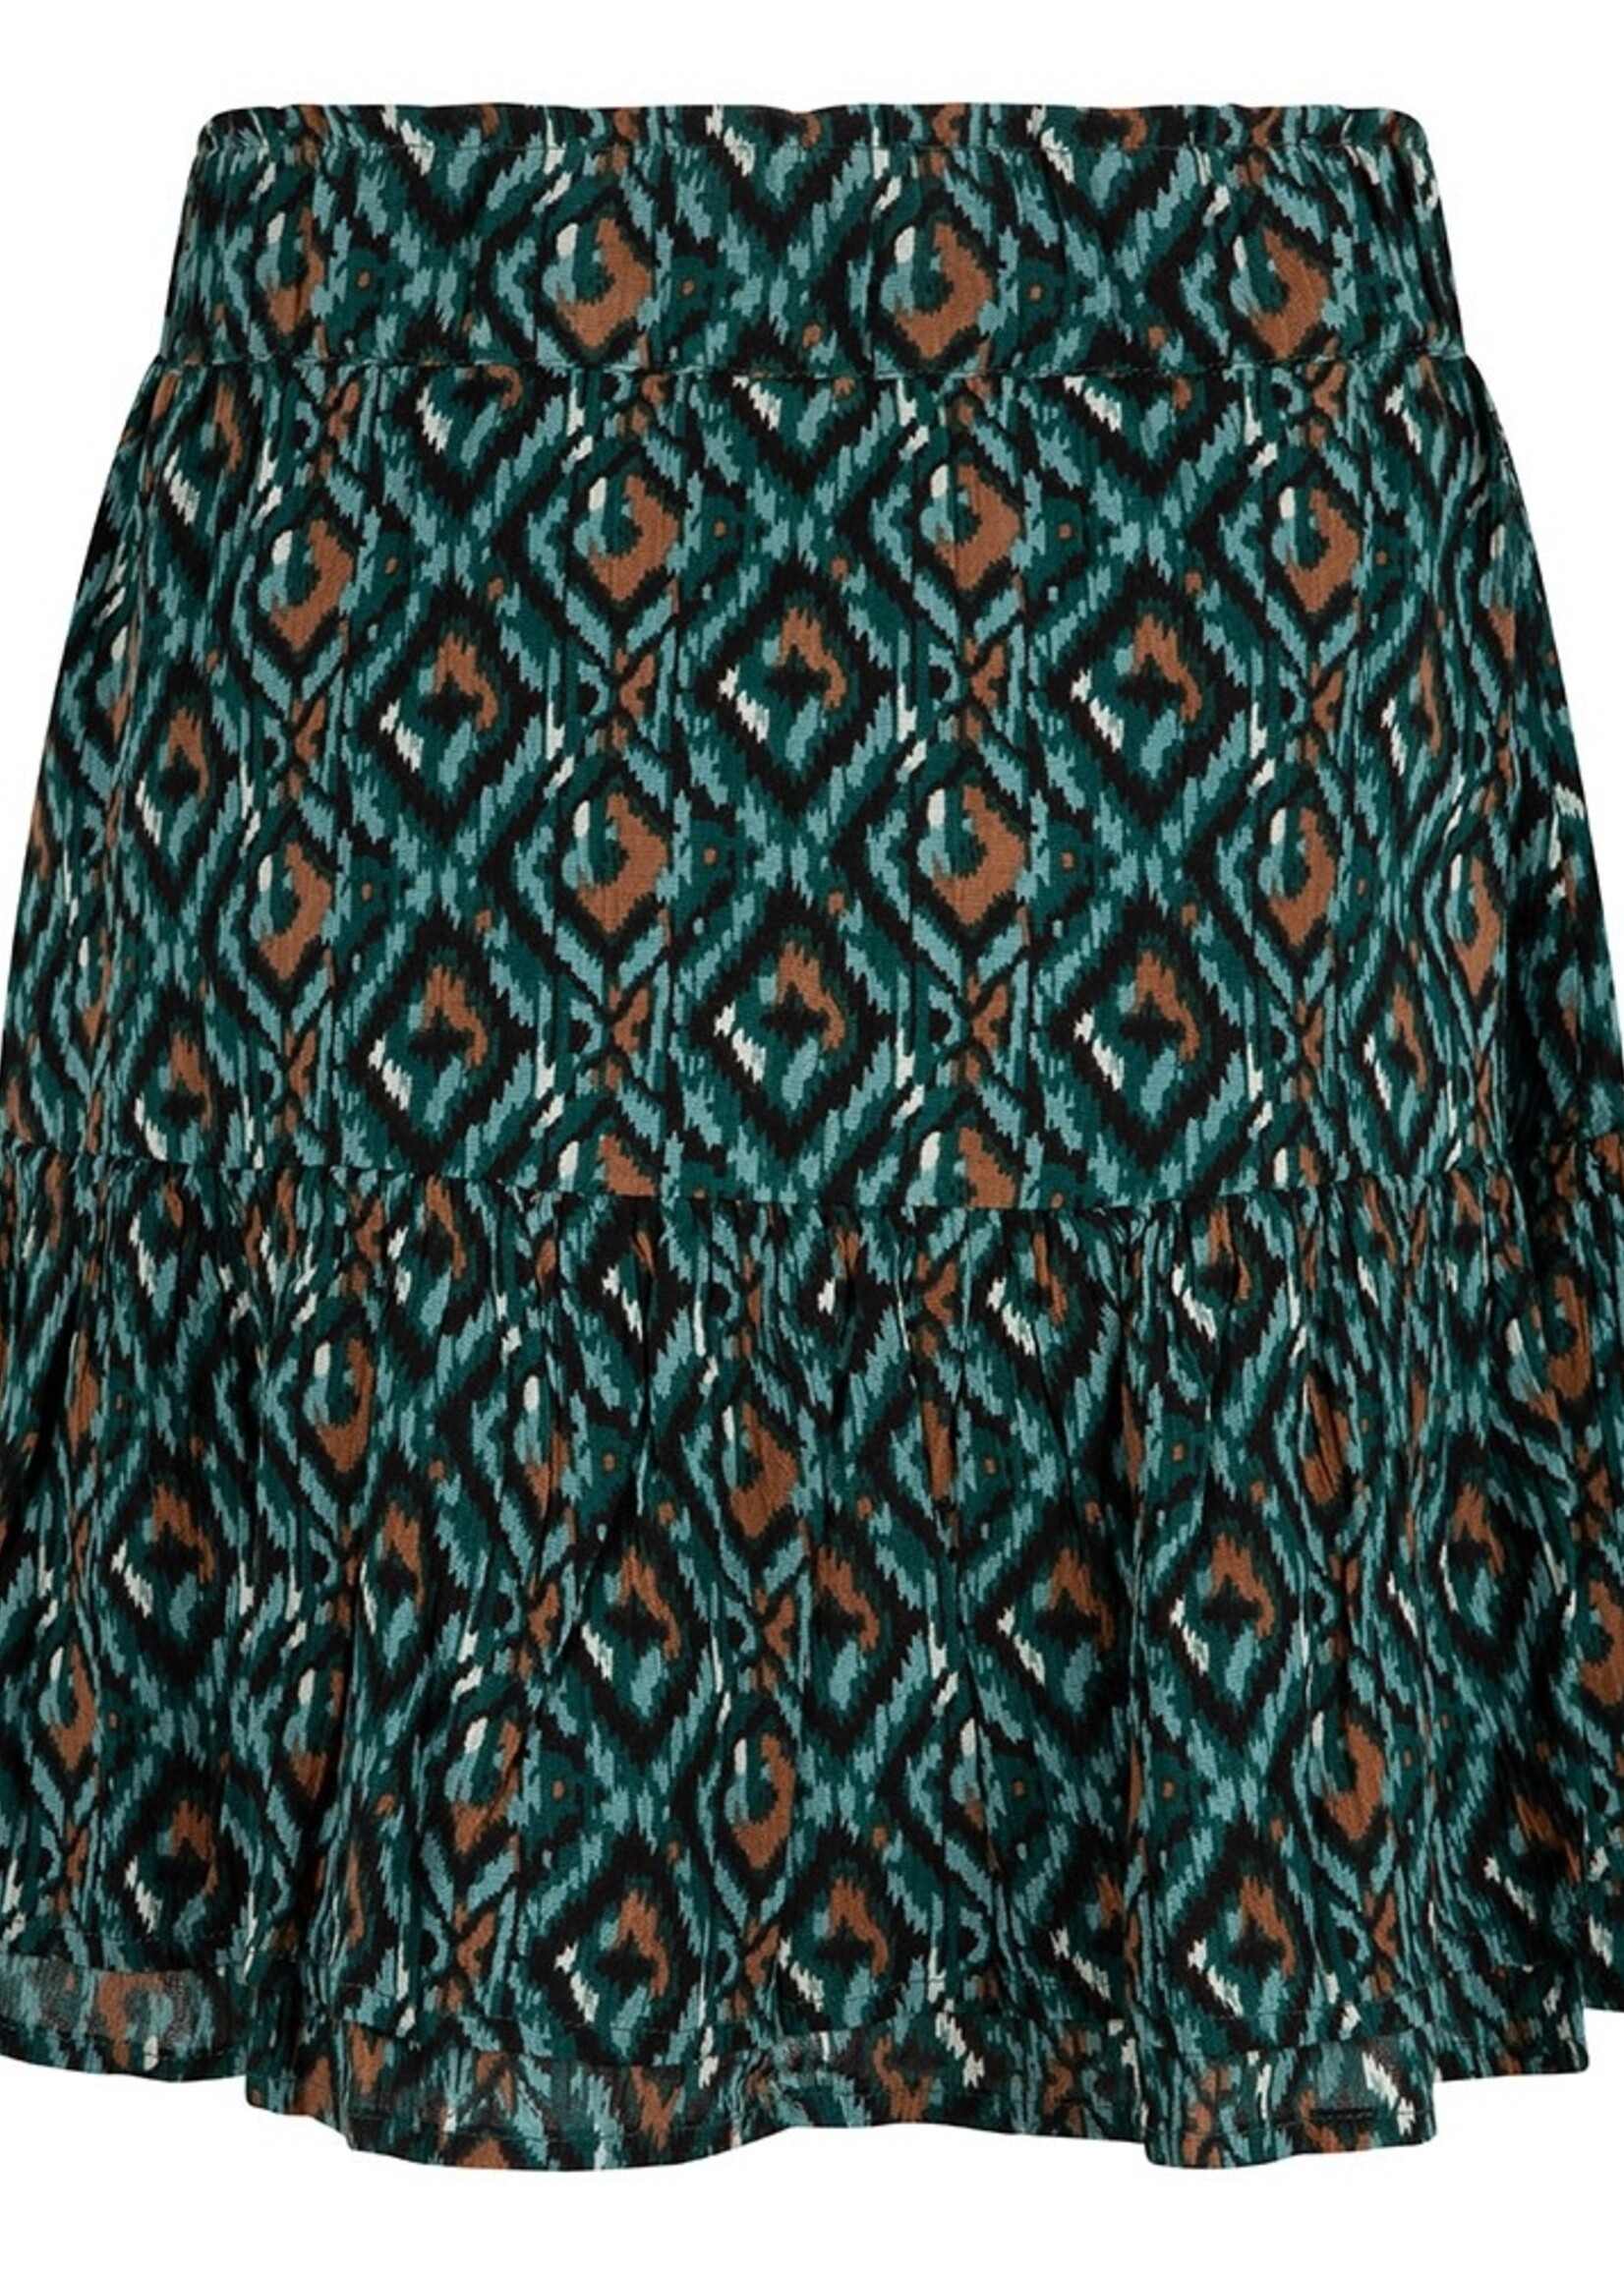 Aztec skirt - Bayberry green